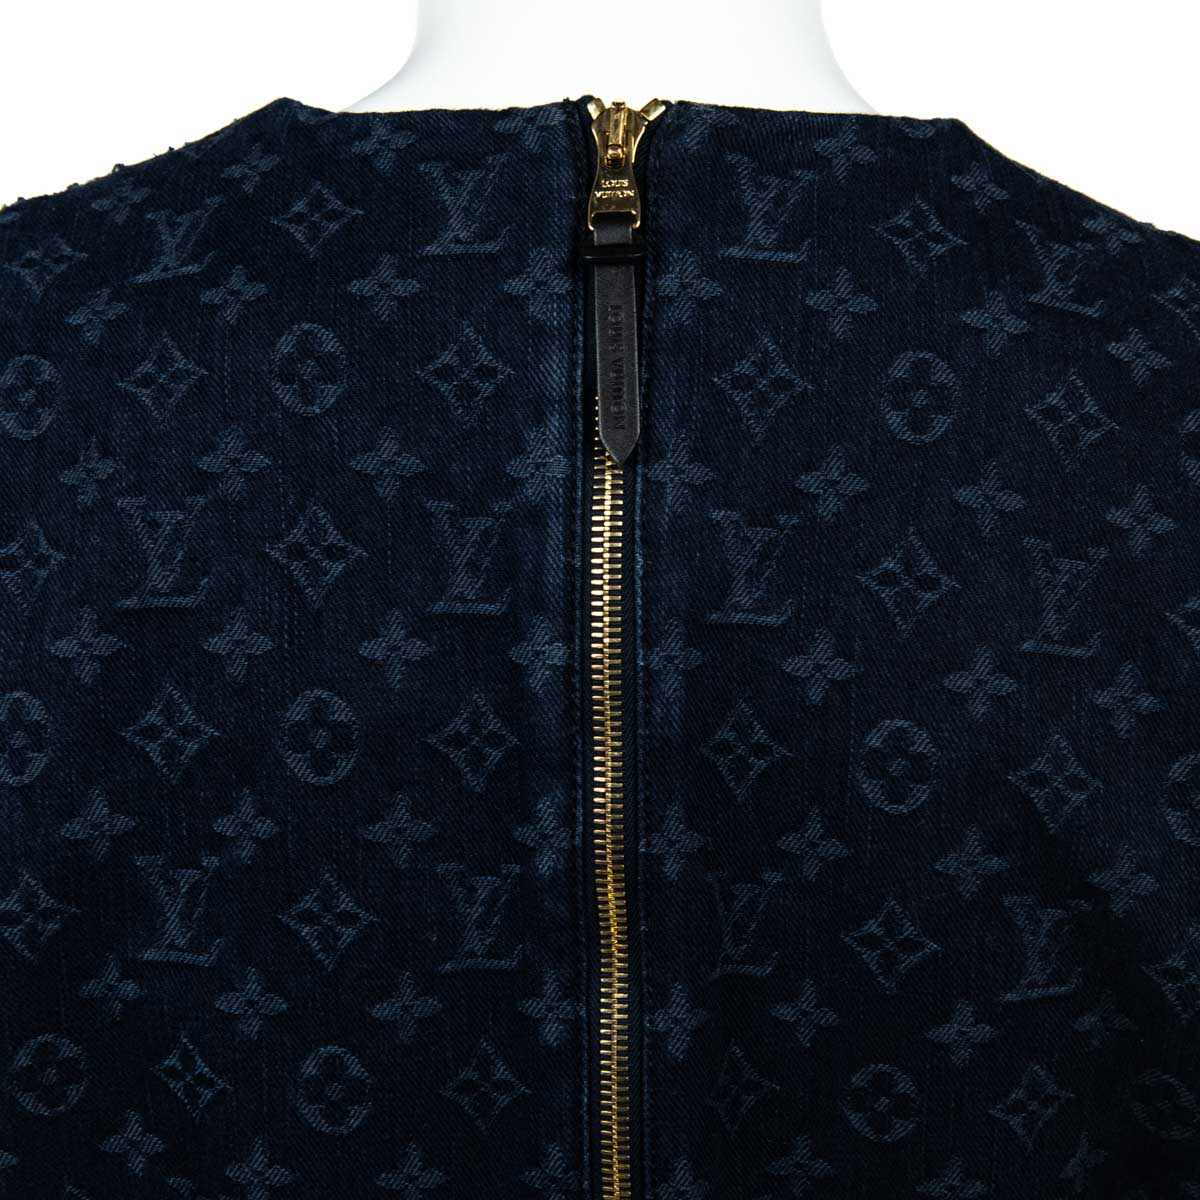 Louis Vuitton Monogram Leather Trucker Jacket BLACK. Size 44